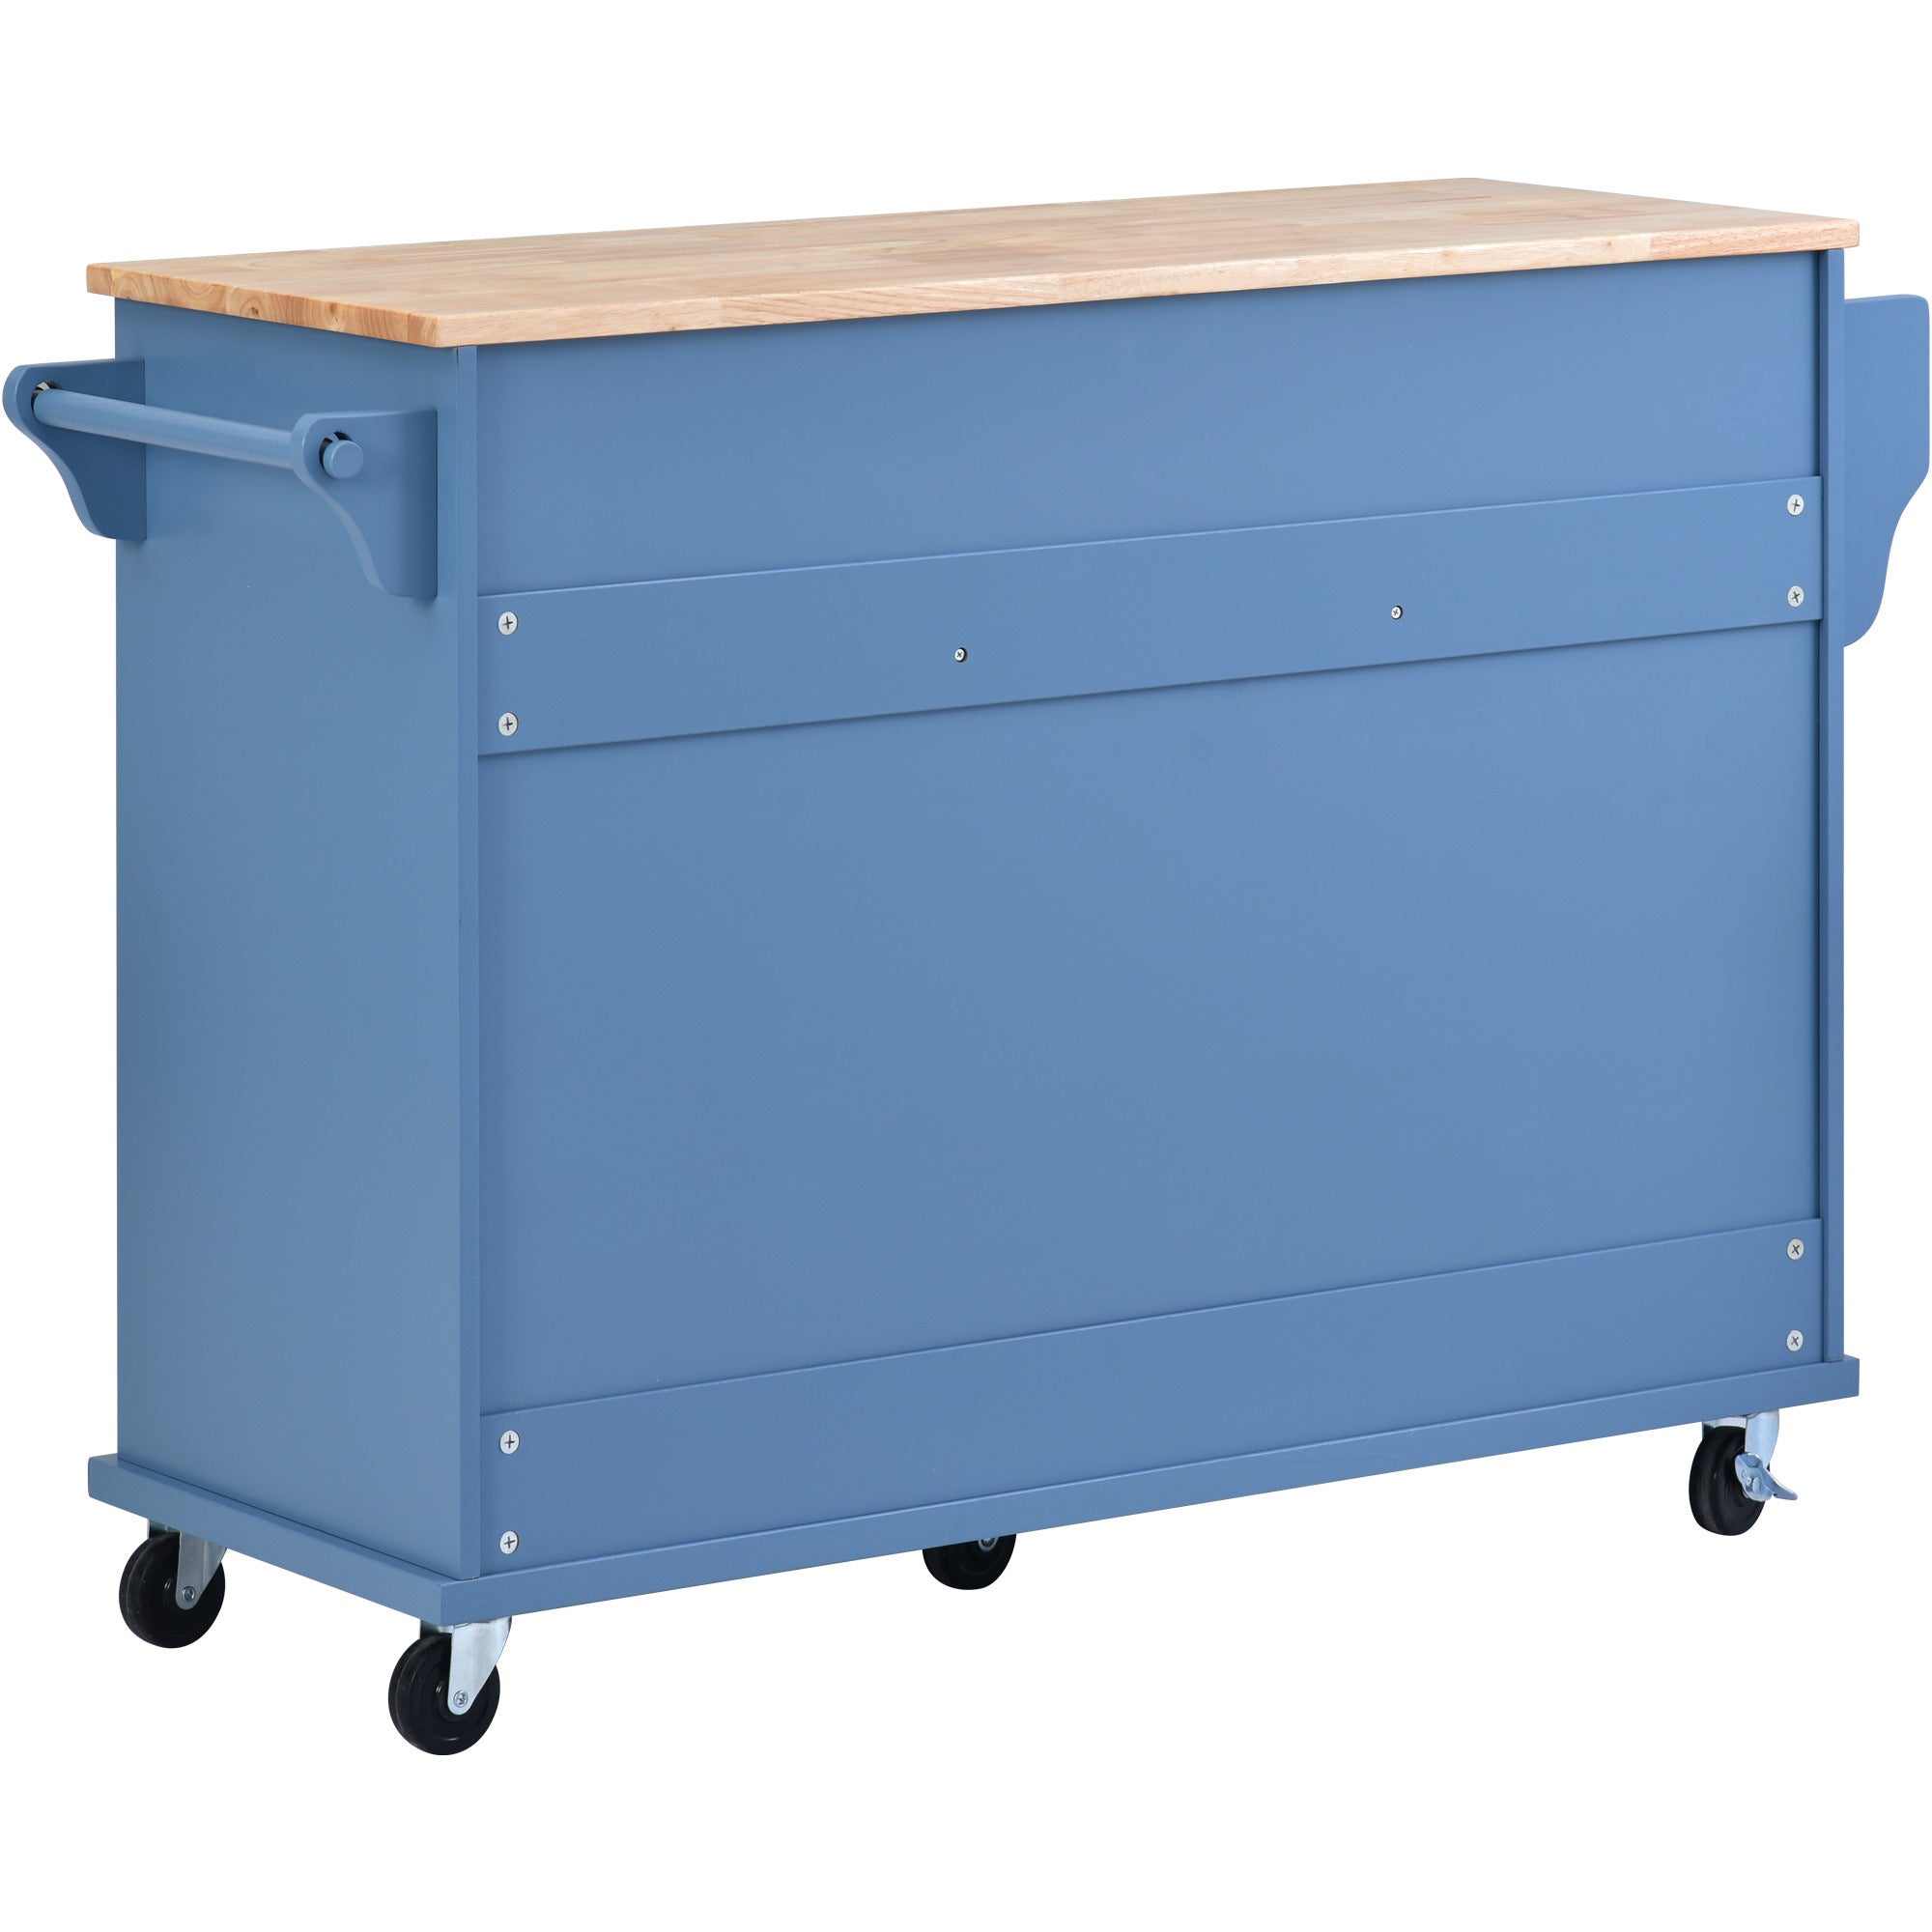 Kitchen Island Cart with Rubber Wood Desktop for Storage, Blue